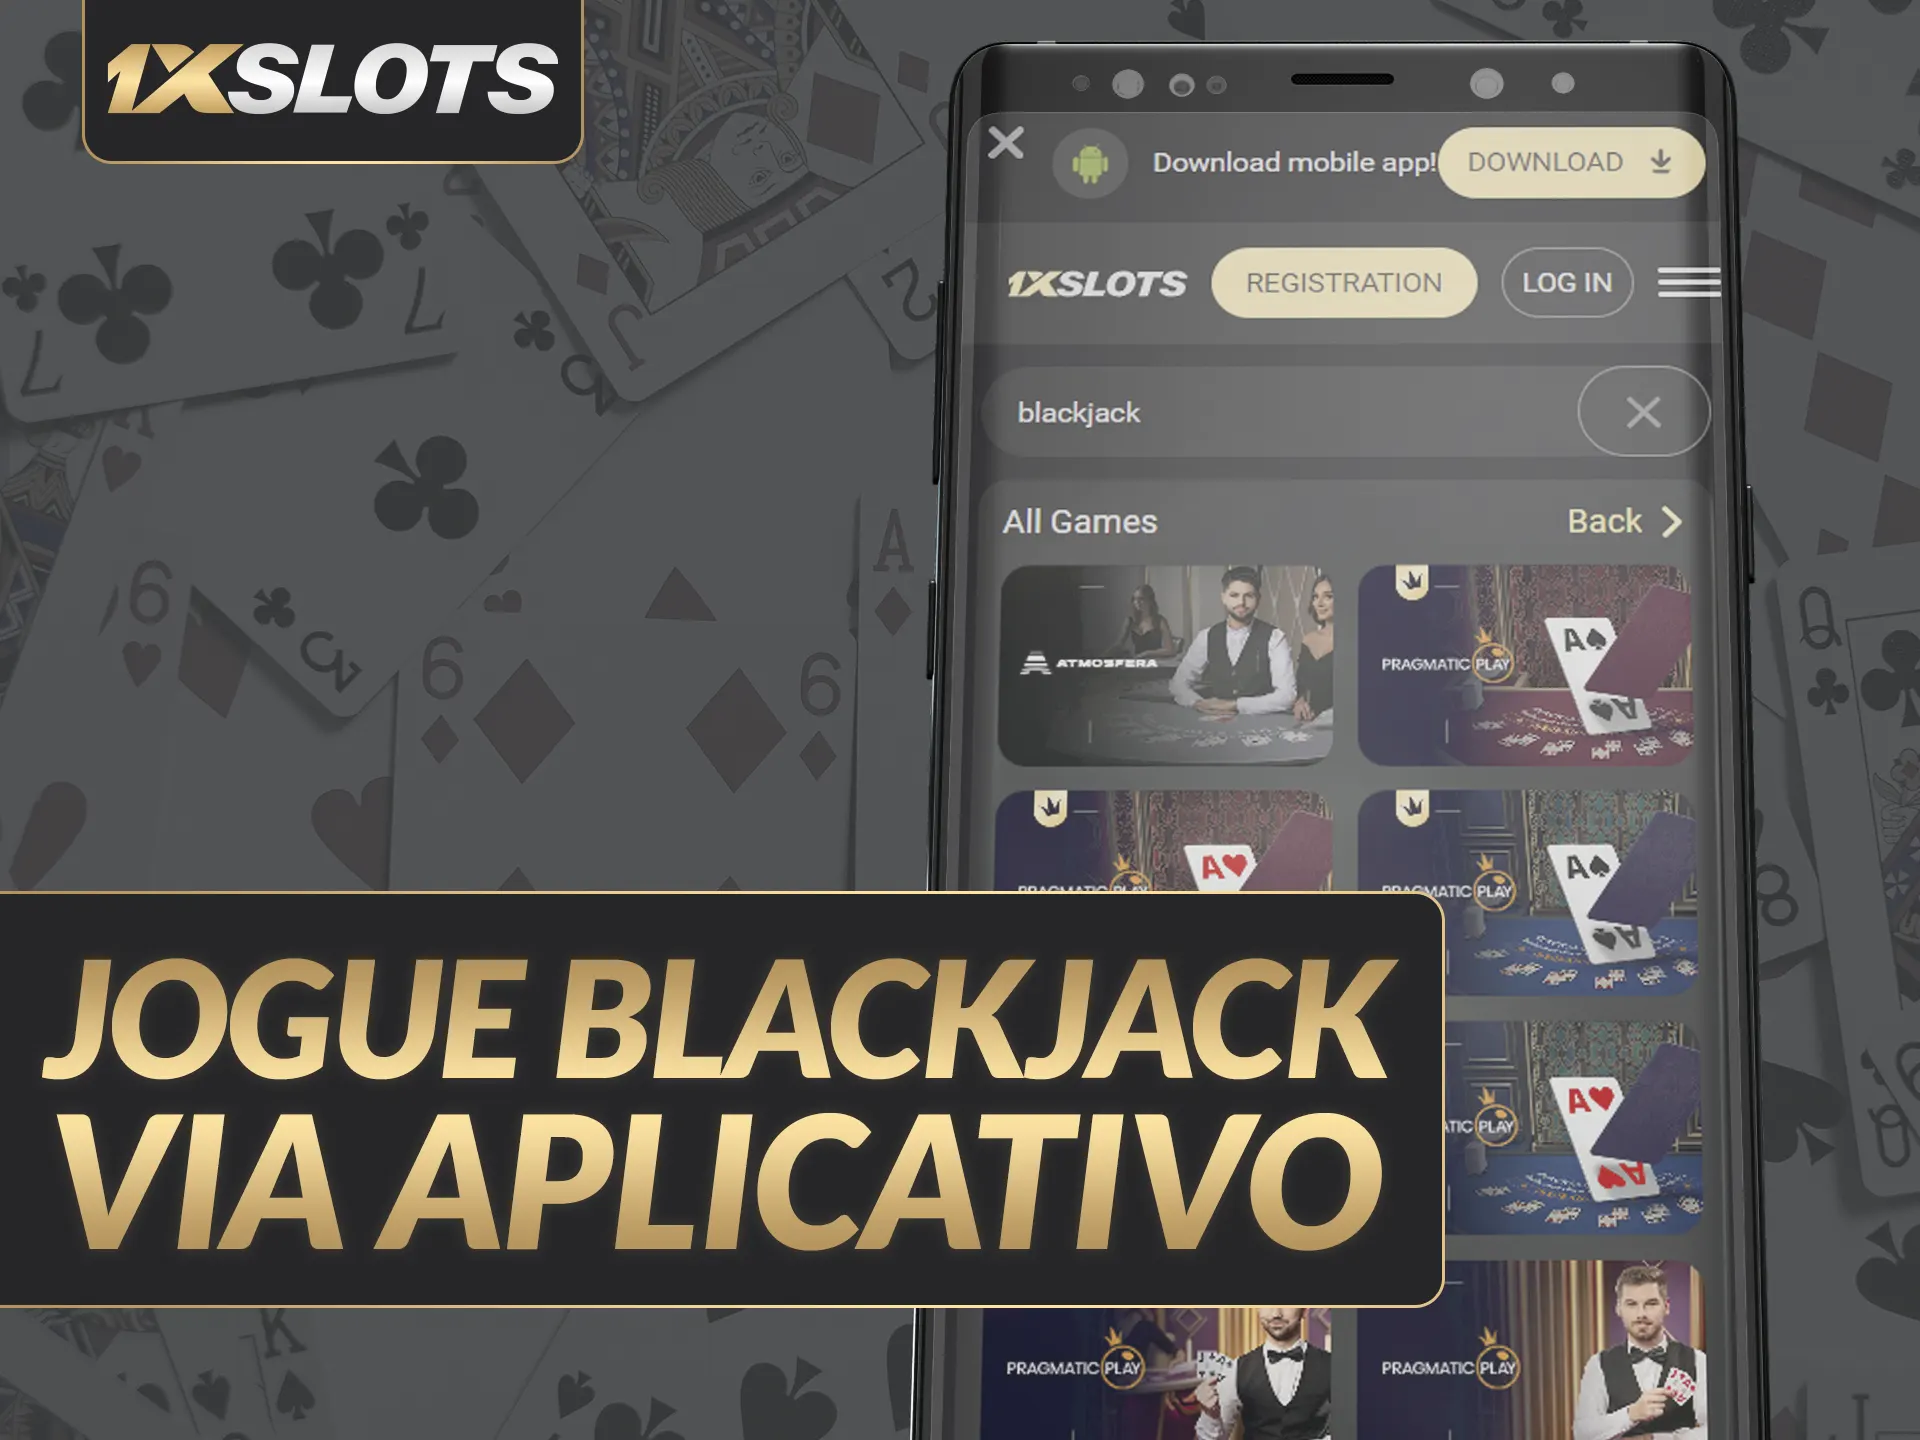 Jogue Blackjack pelo Aplicativo Móvel 1xSlots.